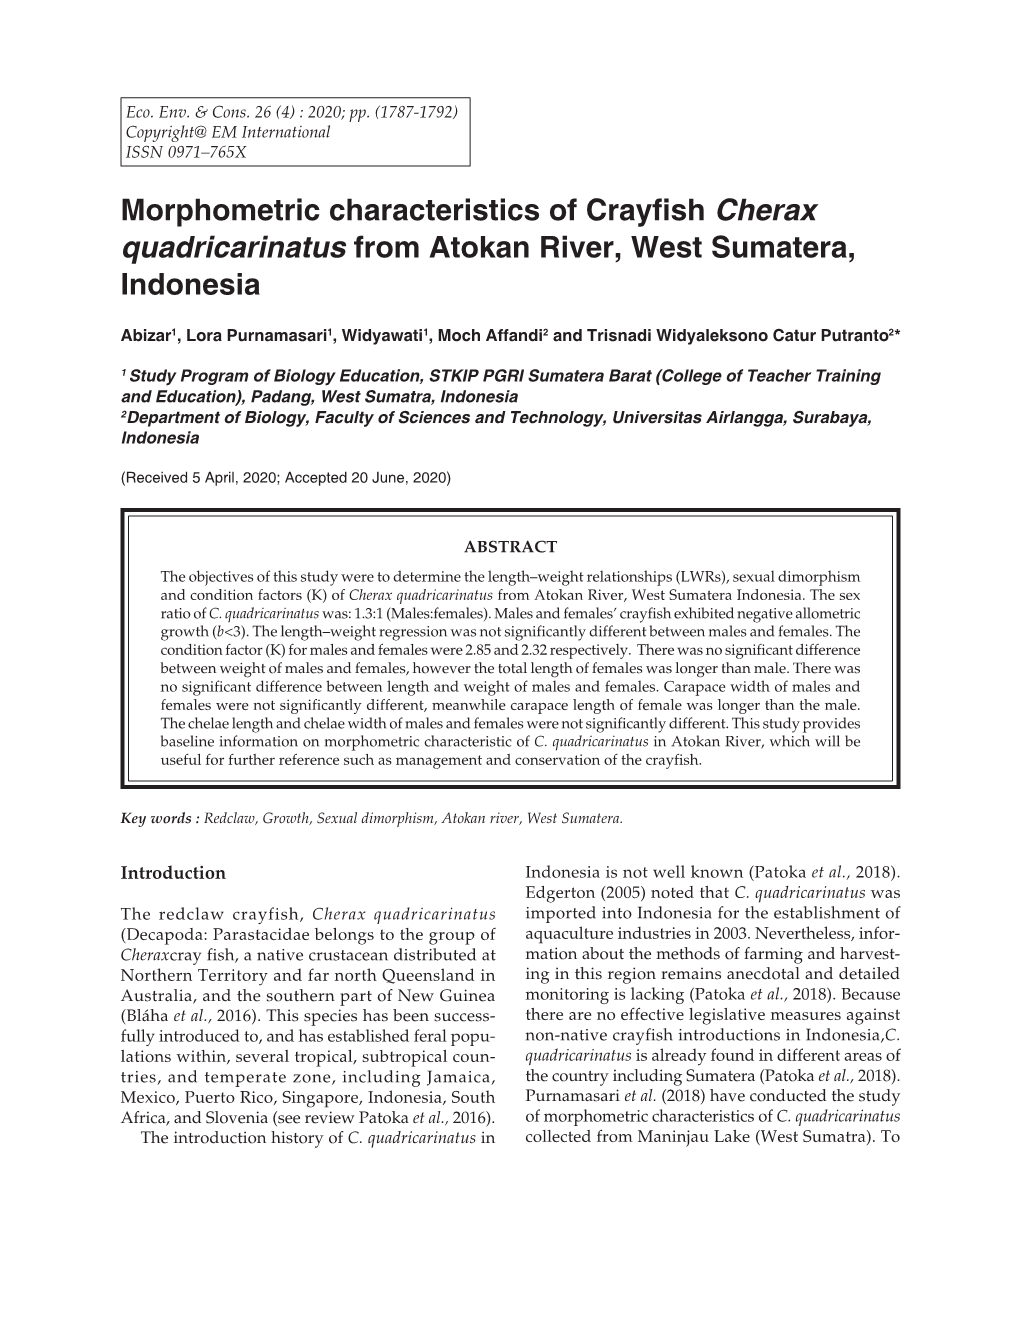 Morphometric Characteristics of Crayfish Cherax Quadricarinatus from Atokan River, West Sumatera, Indonesia